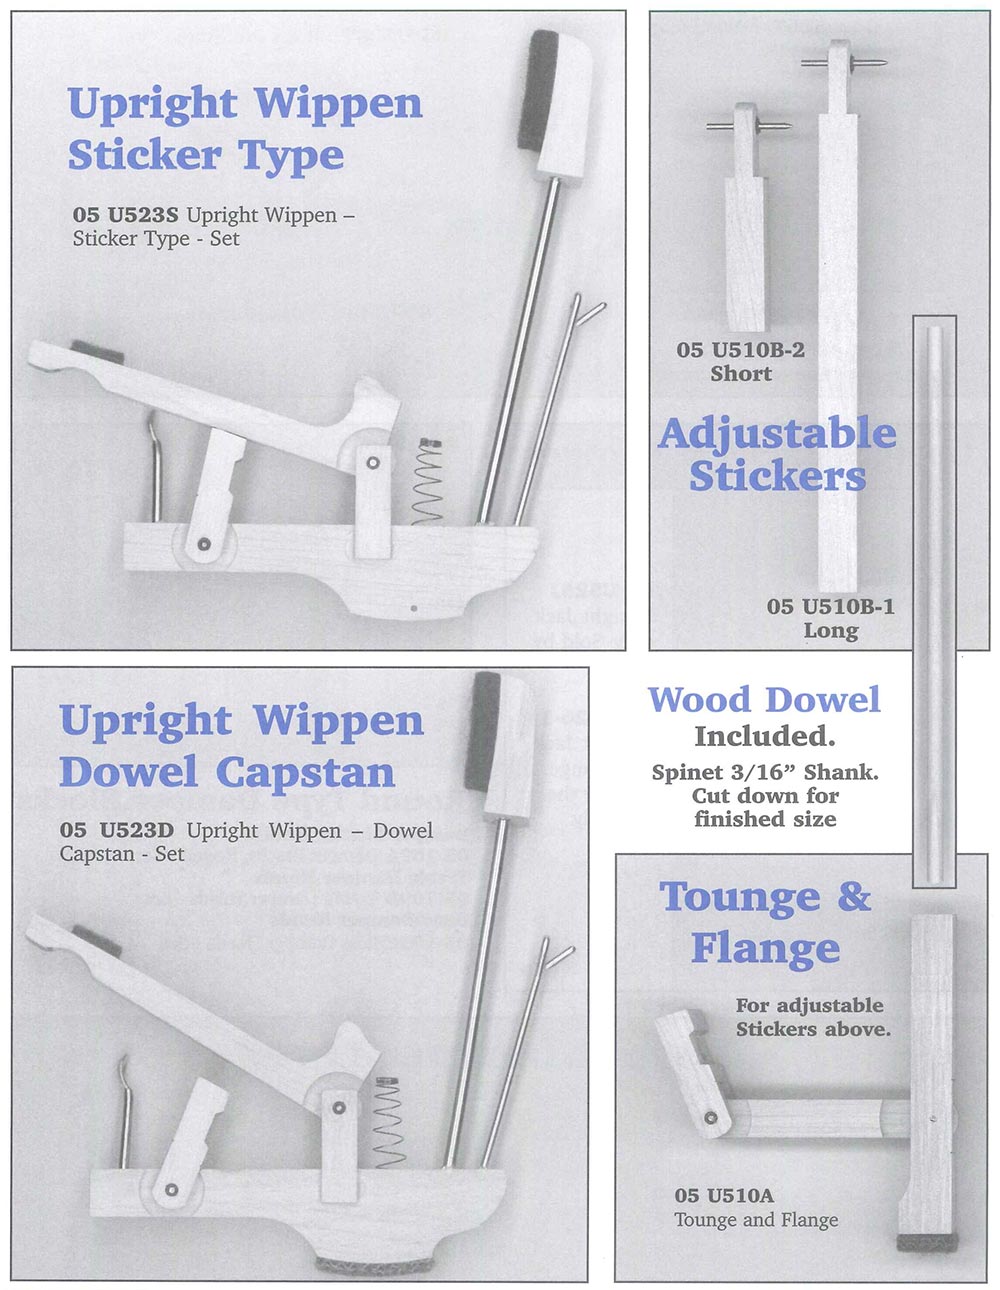 Upright Wippen Sticker Type